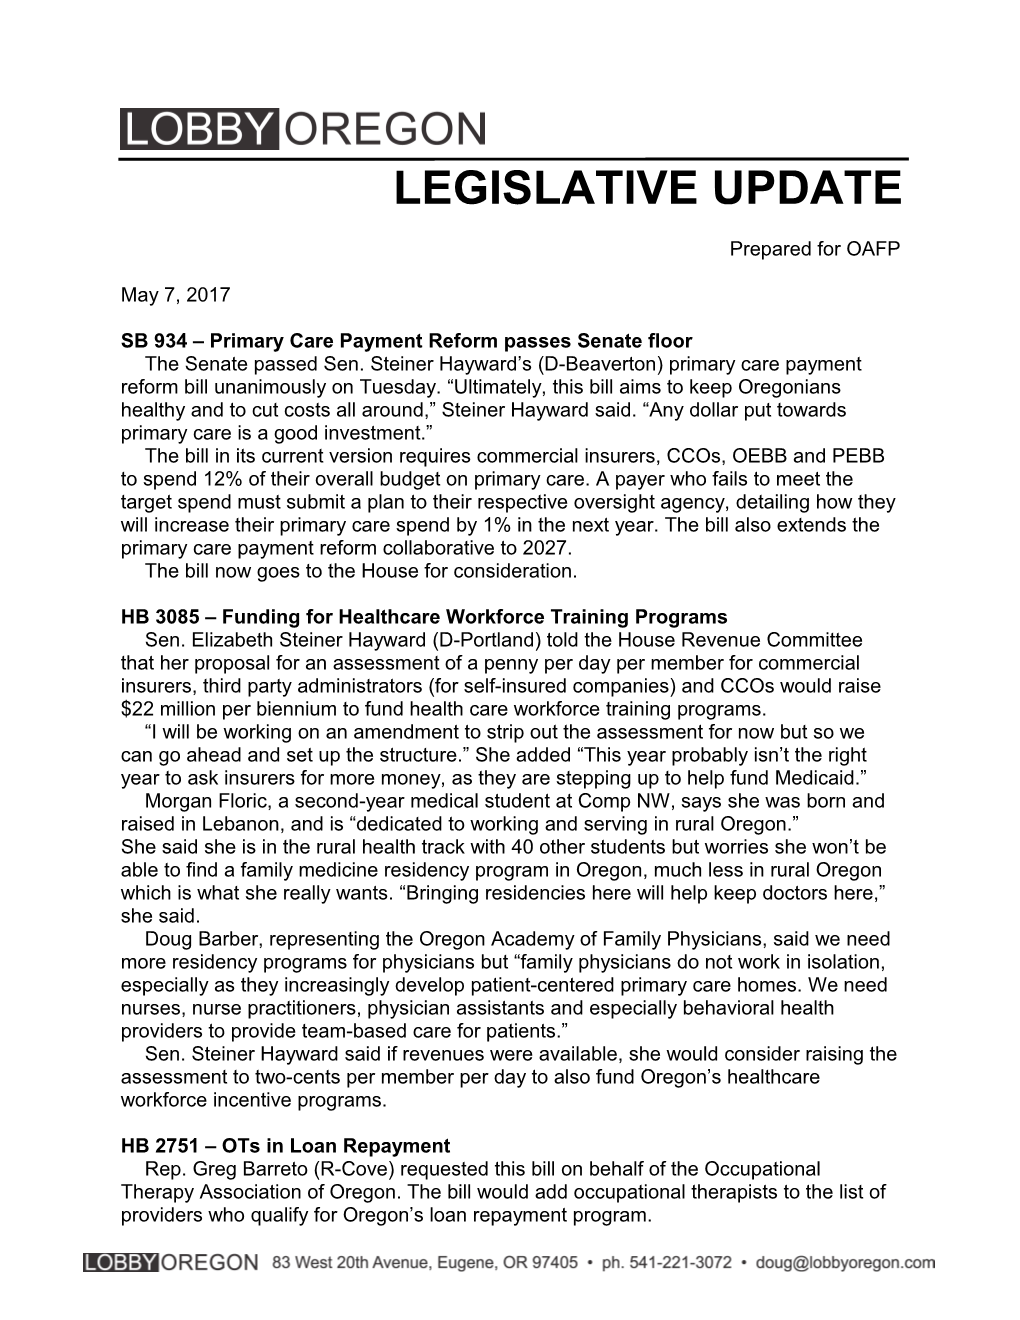 SB 934 Primary Care Payment Reform Passes Senate Floor